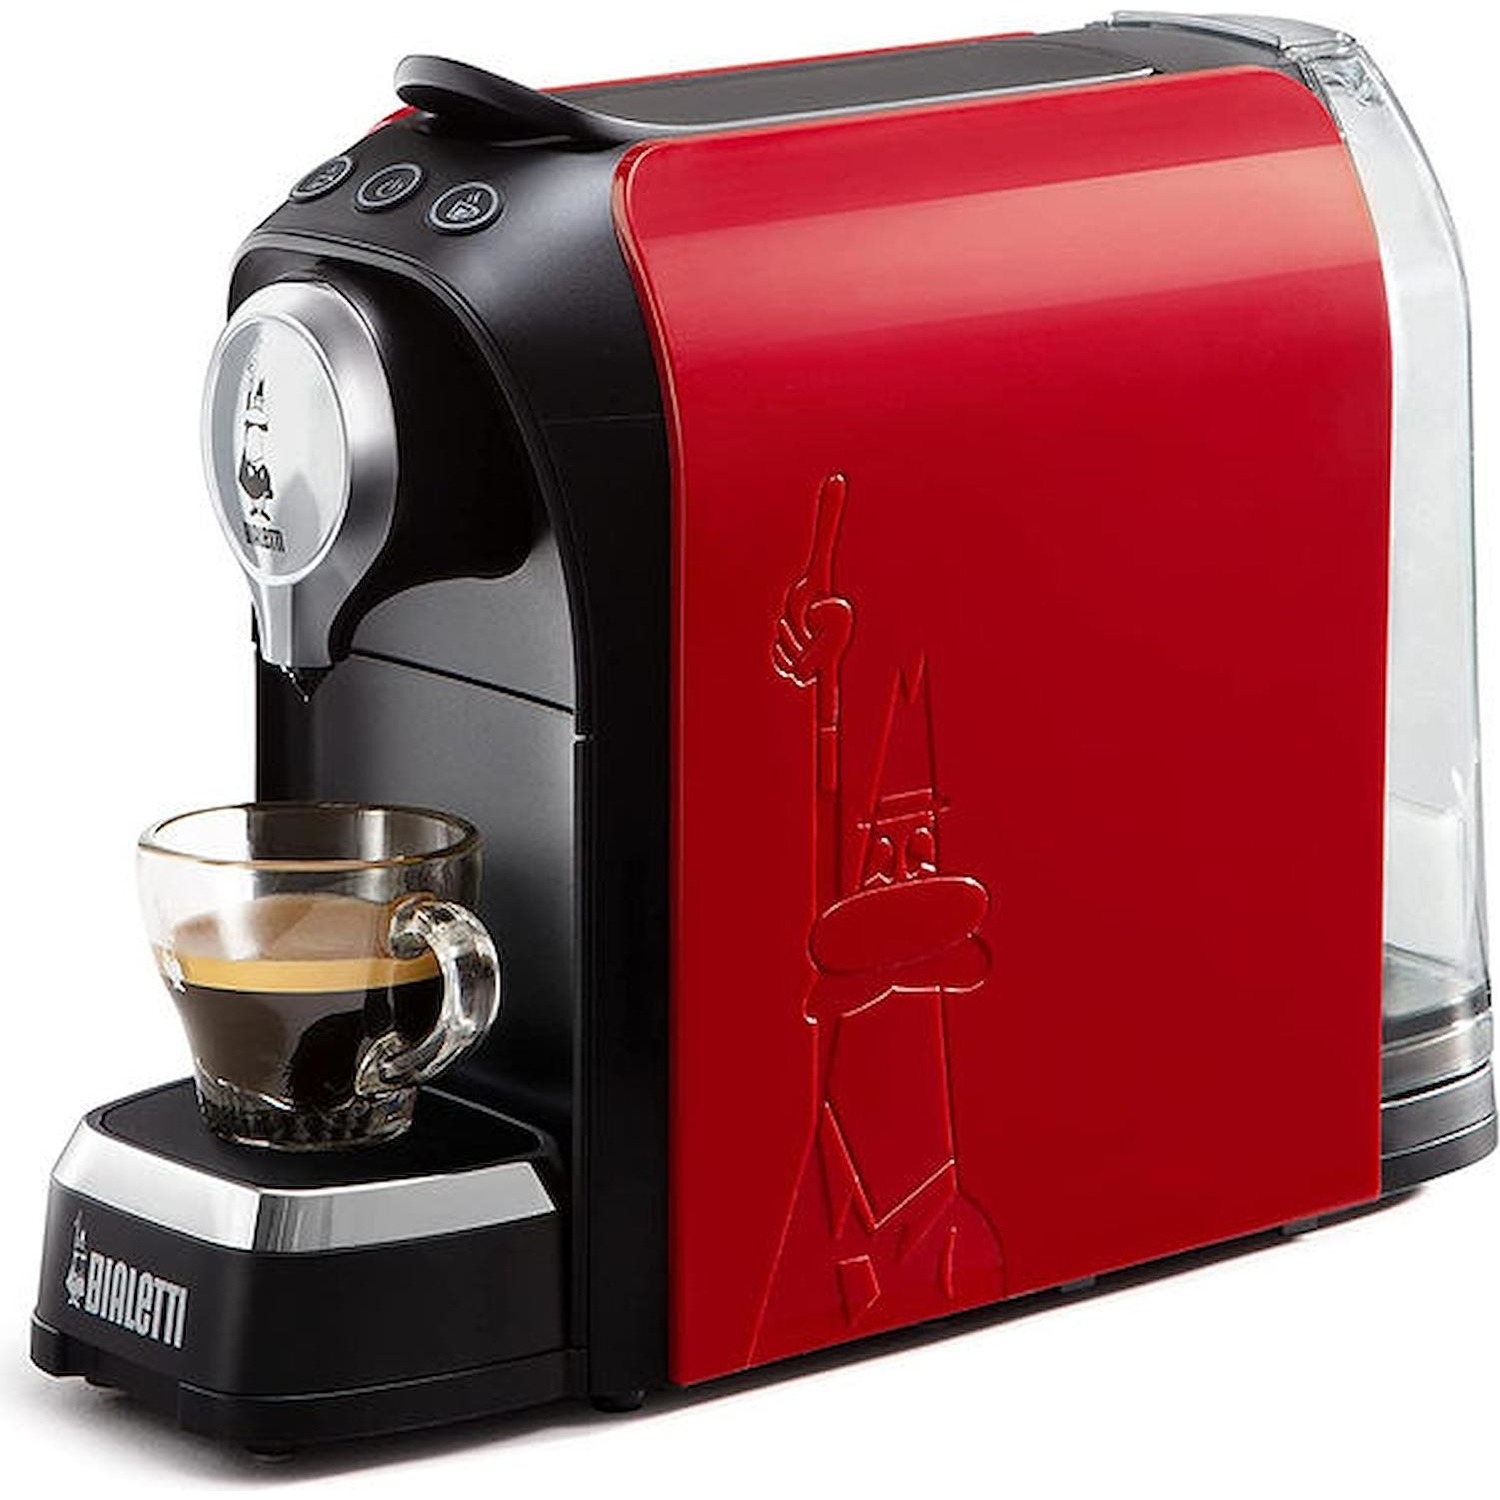 Immagine per Macchina da caffè a capsule sistema Bialetti super red rosso confezione 32 capsule incluse da DIMOStore